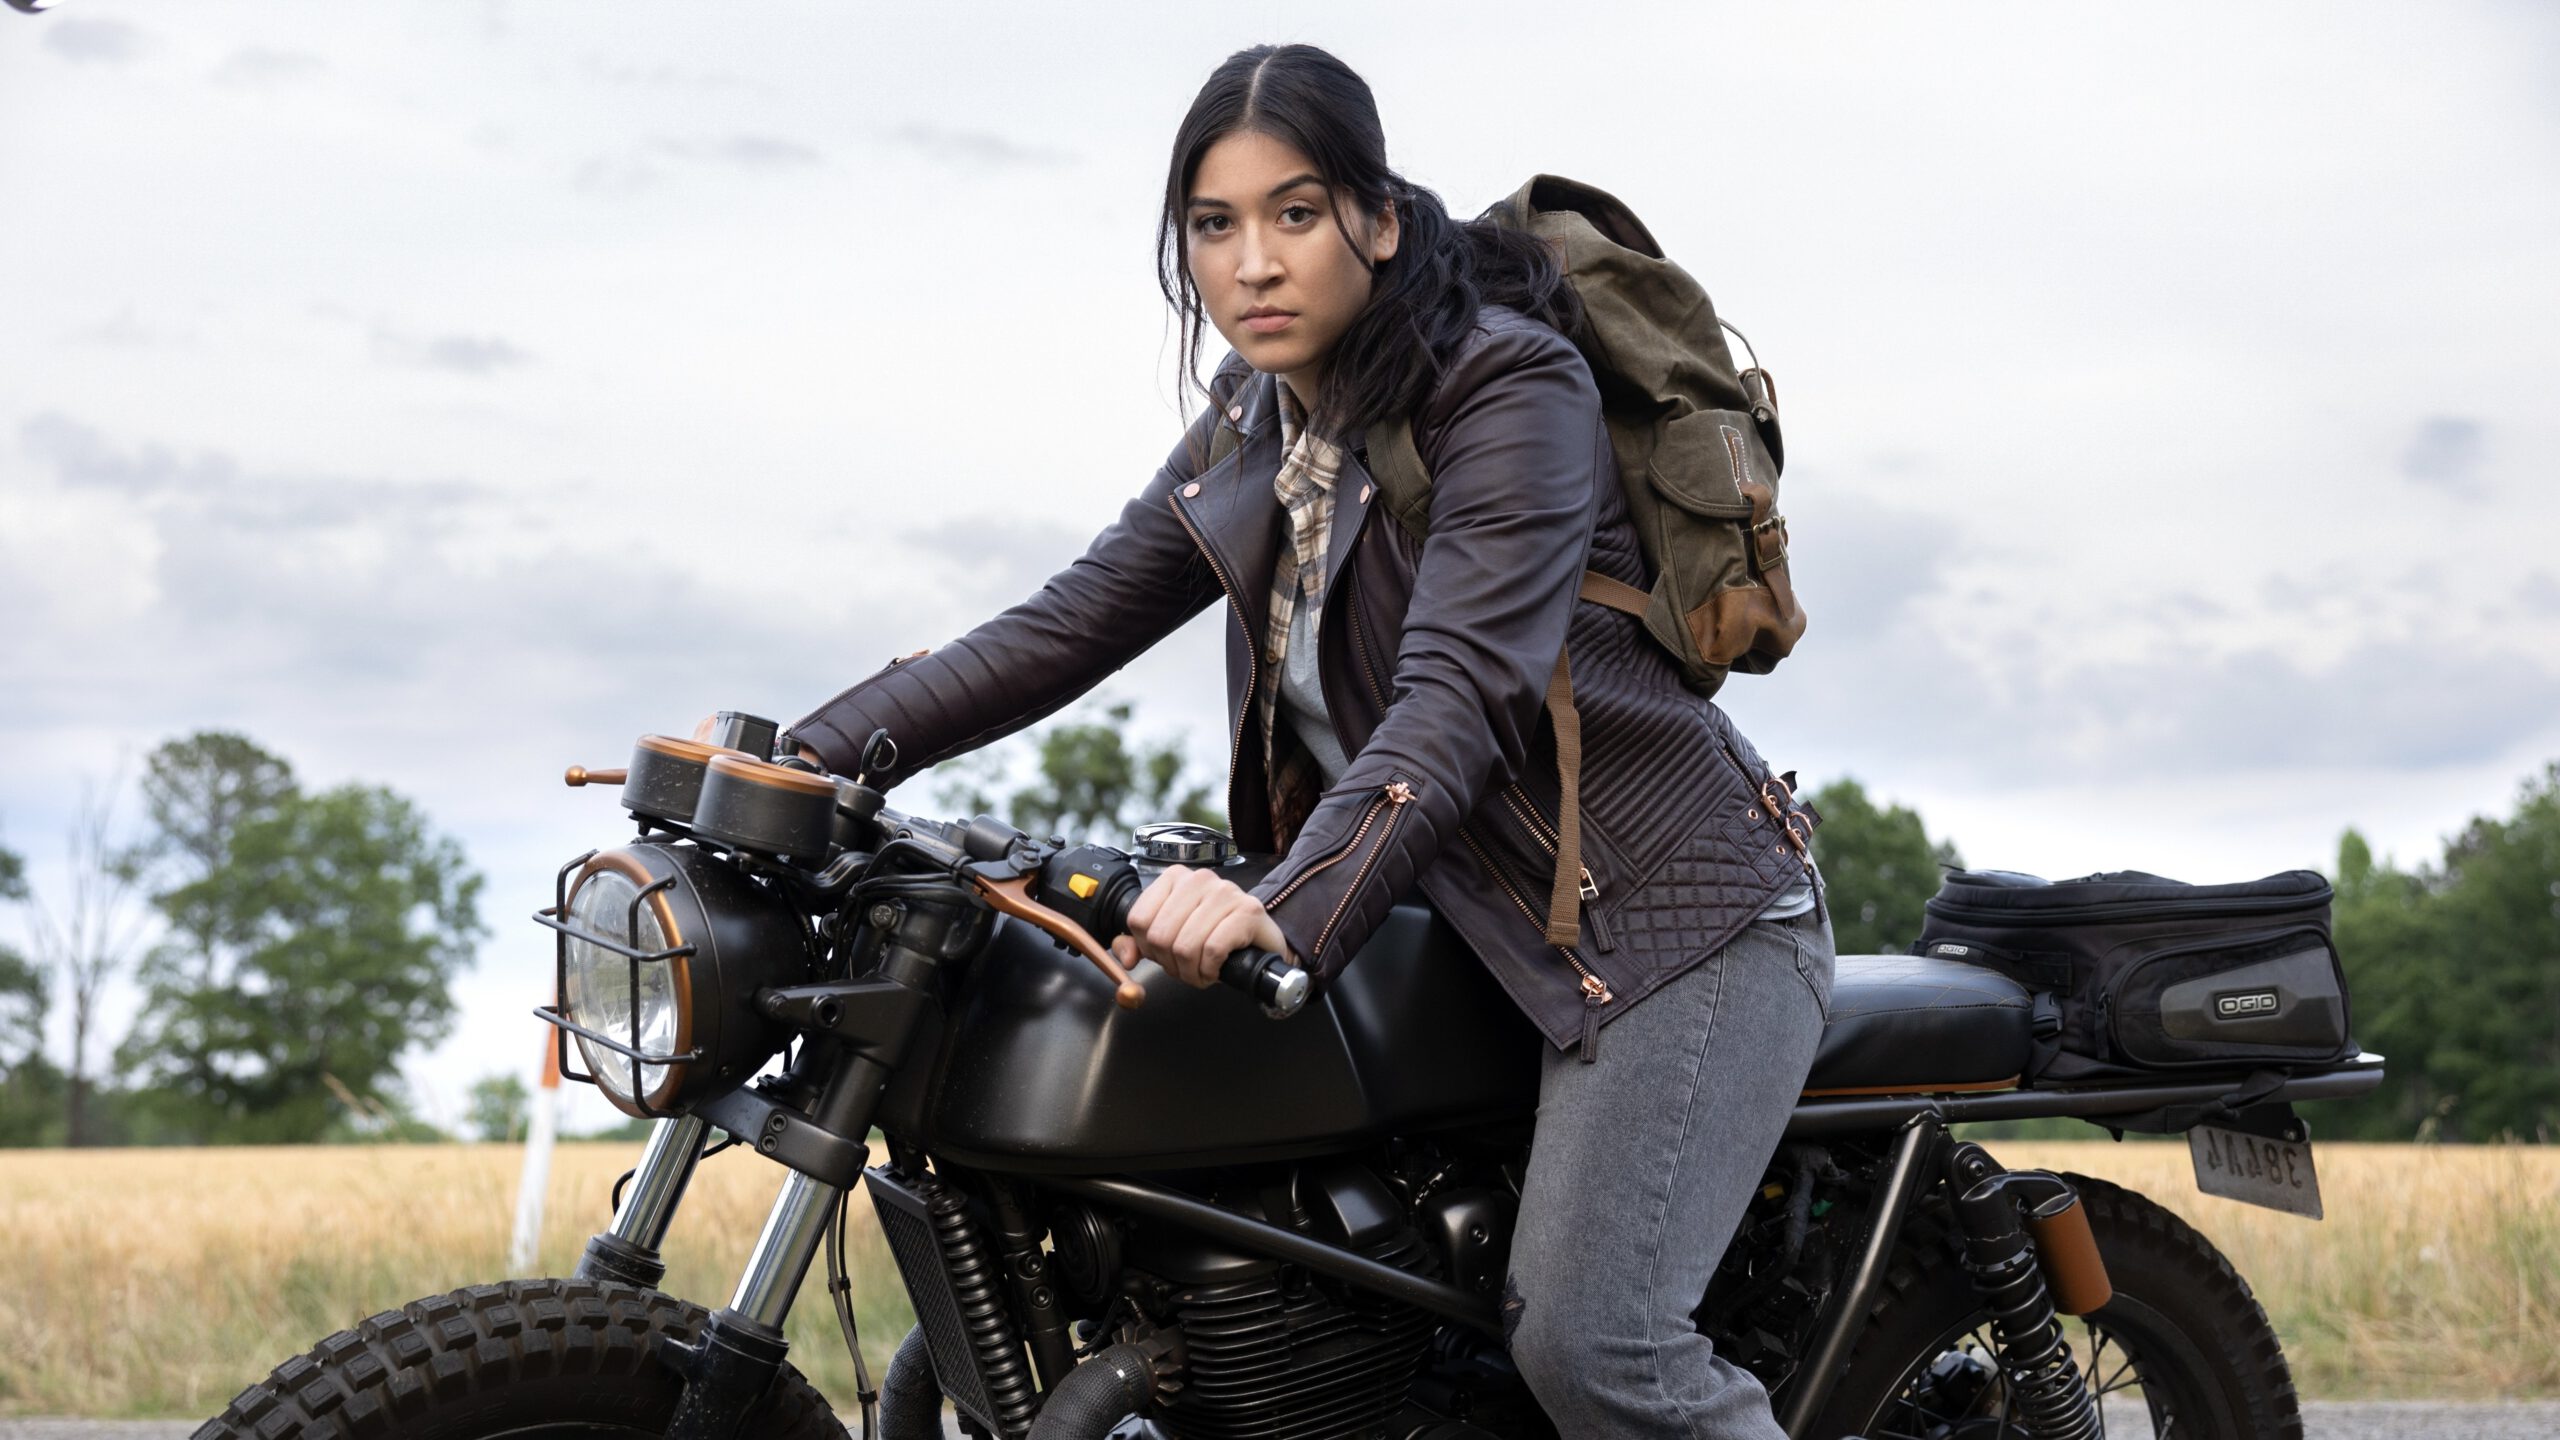 Maya Lopez on her motorcycle.